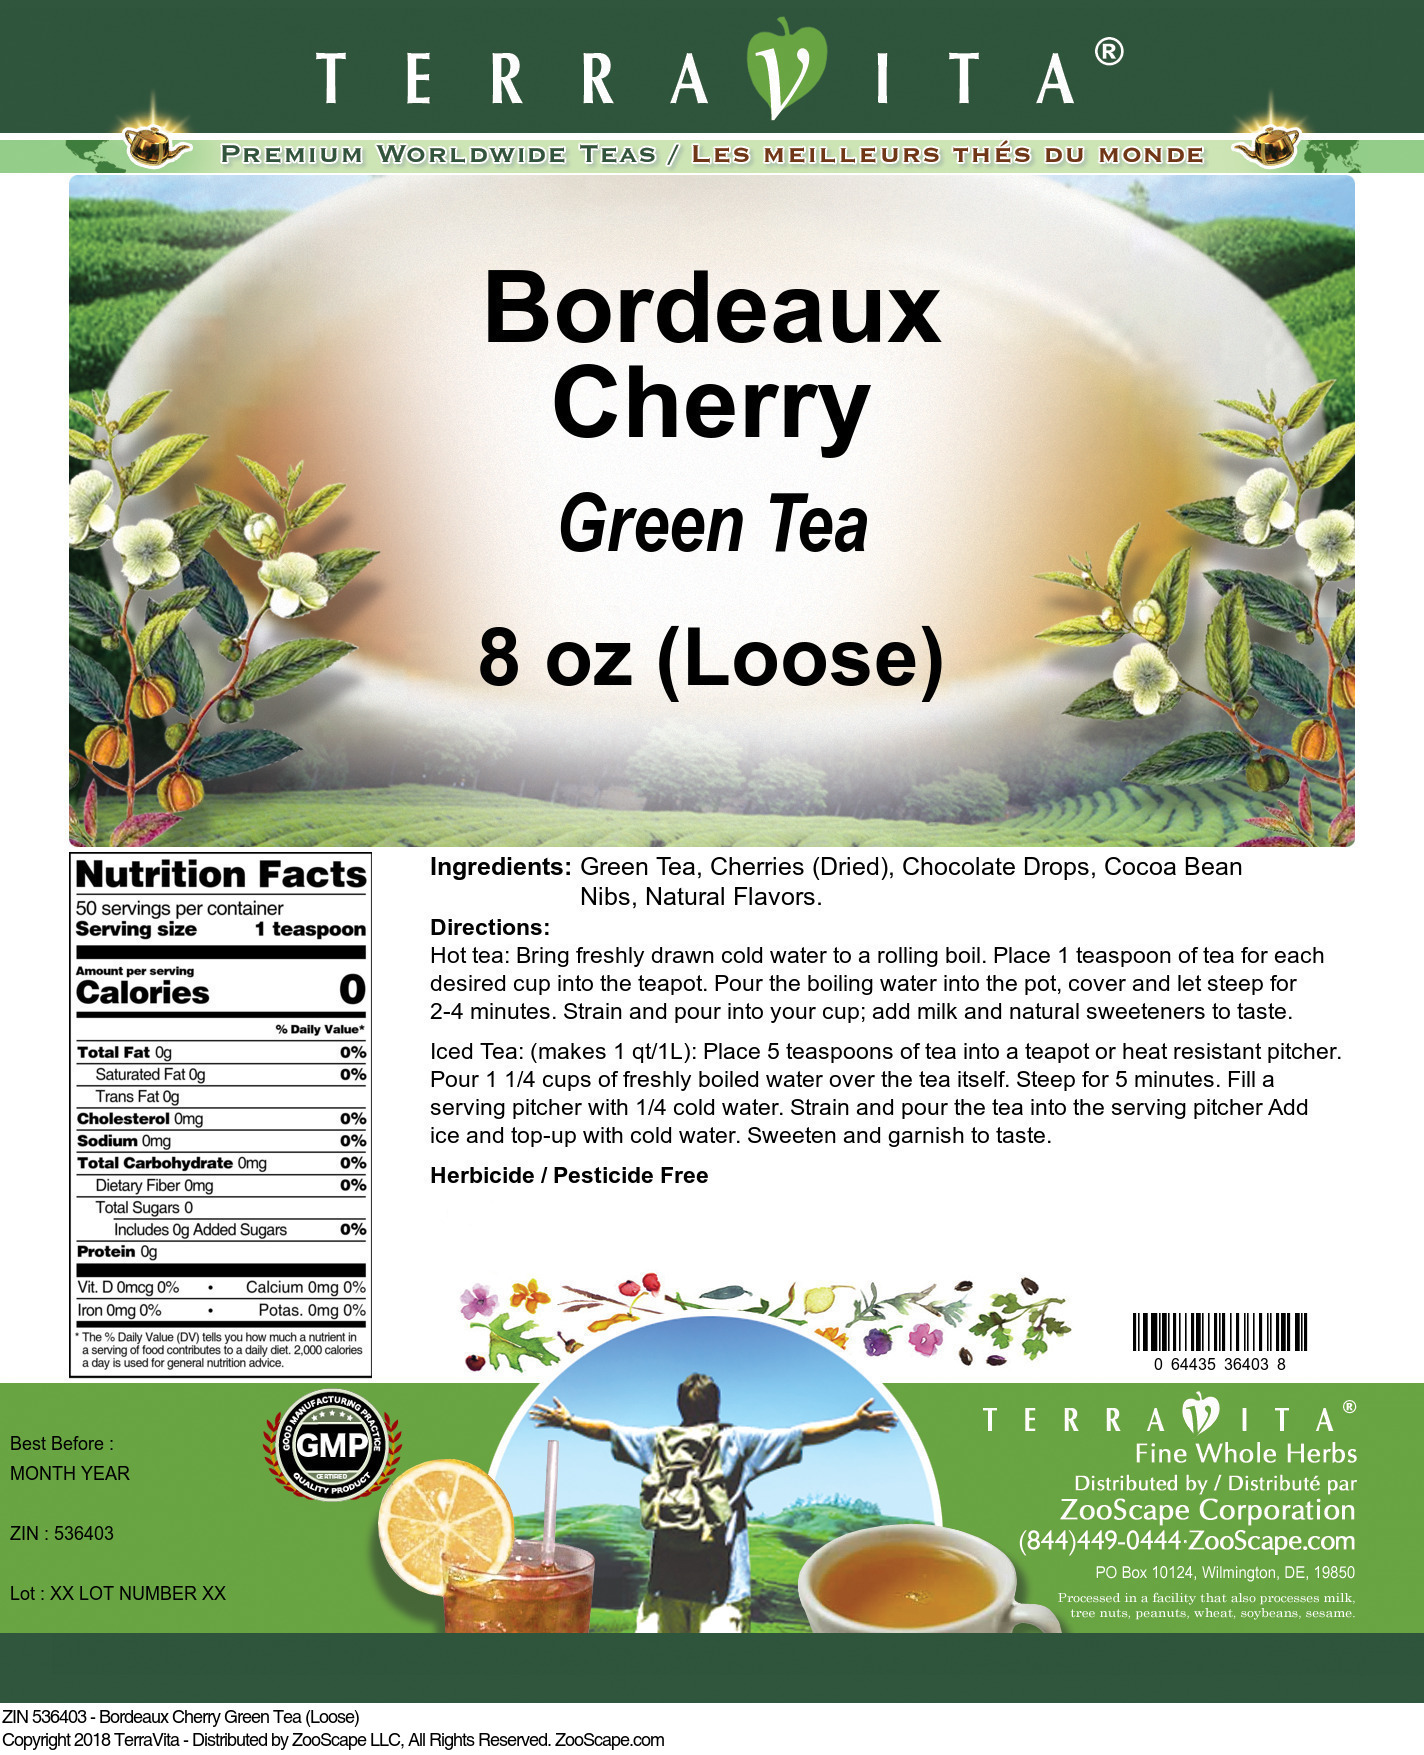 Bordeaux Cherry Green Tea (Loose) - Label